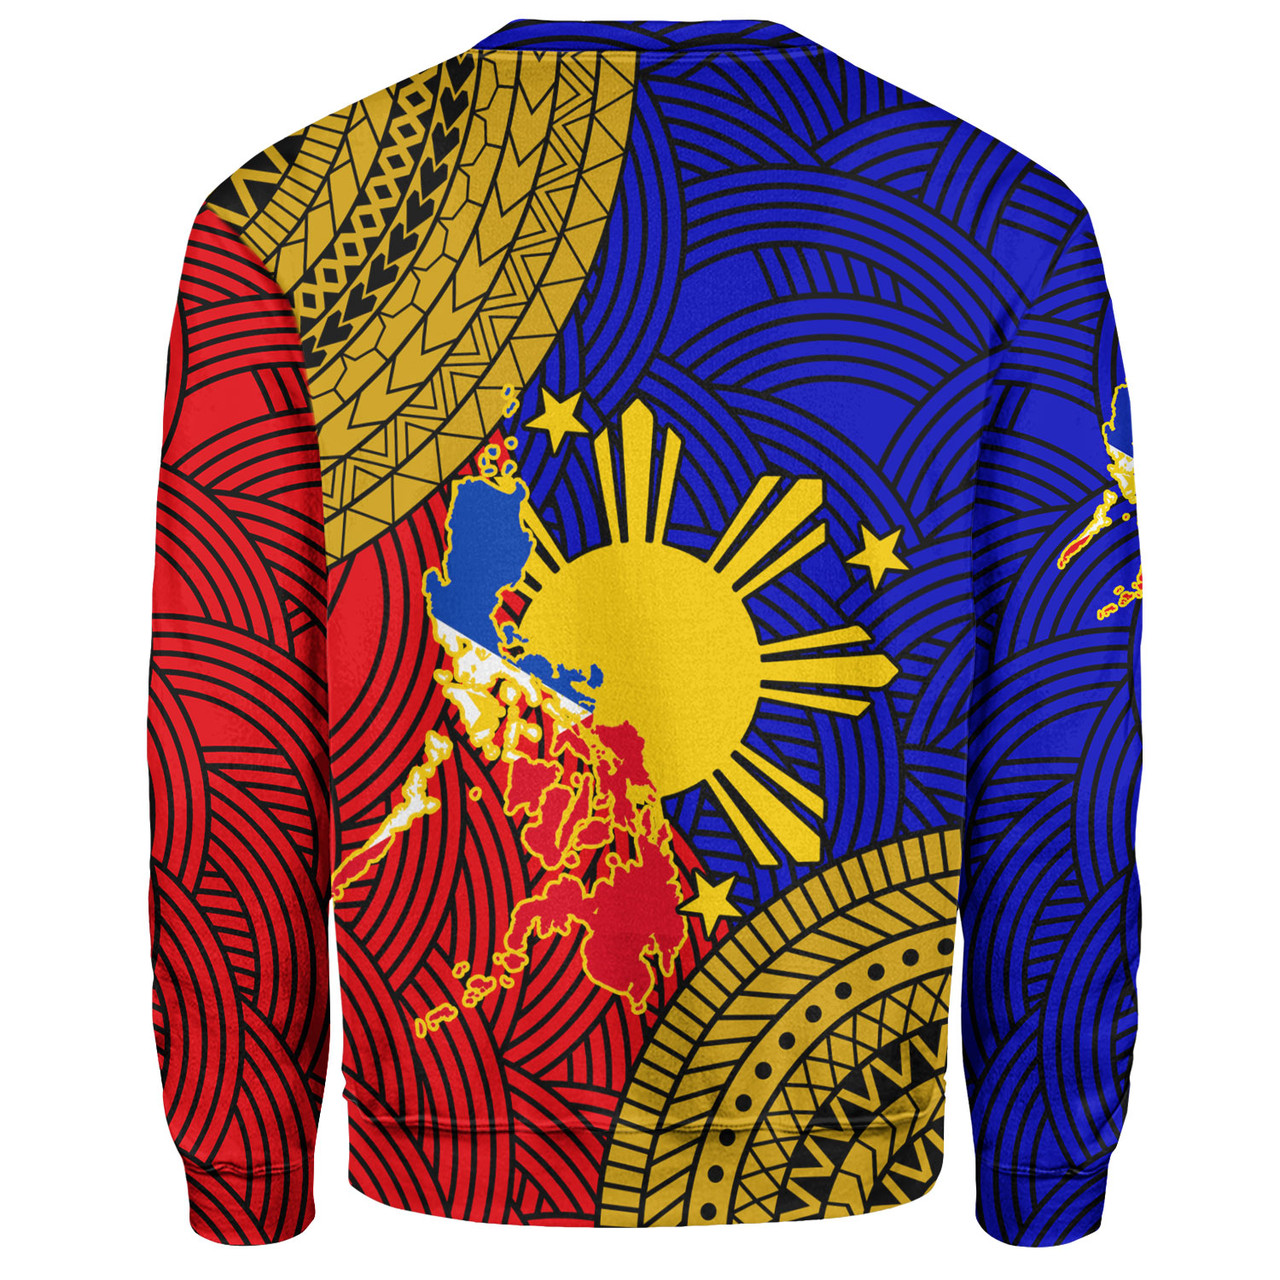 Philippines Filipinos Custom Personalised Sweatshirt Philippines Pride